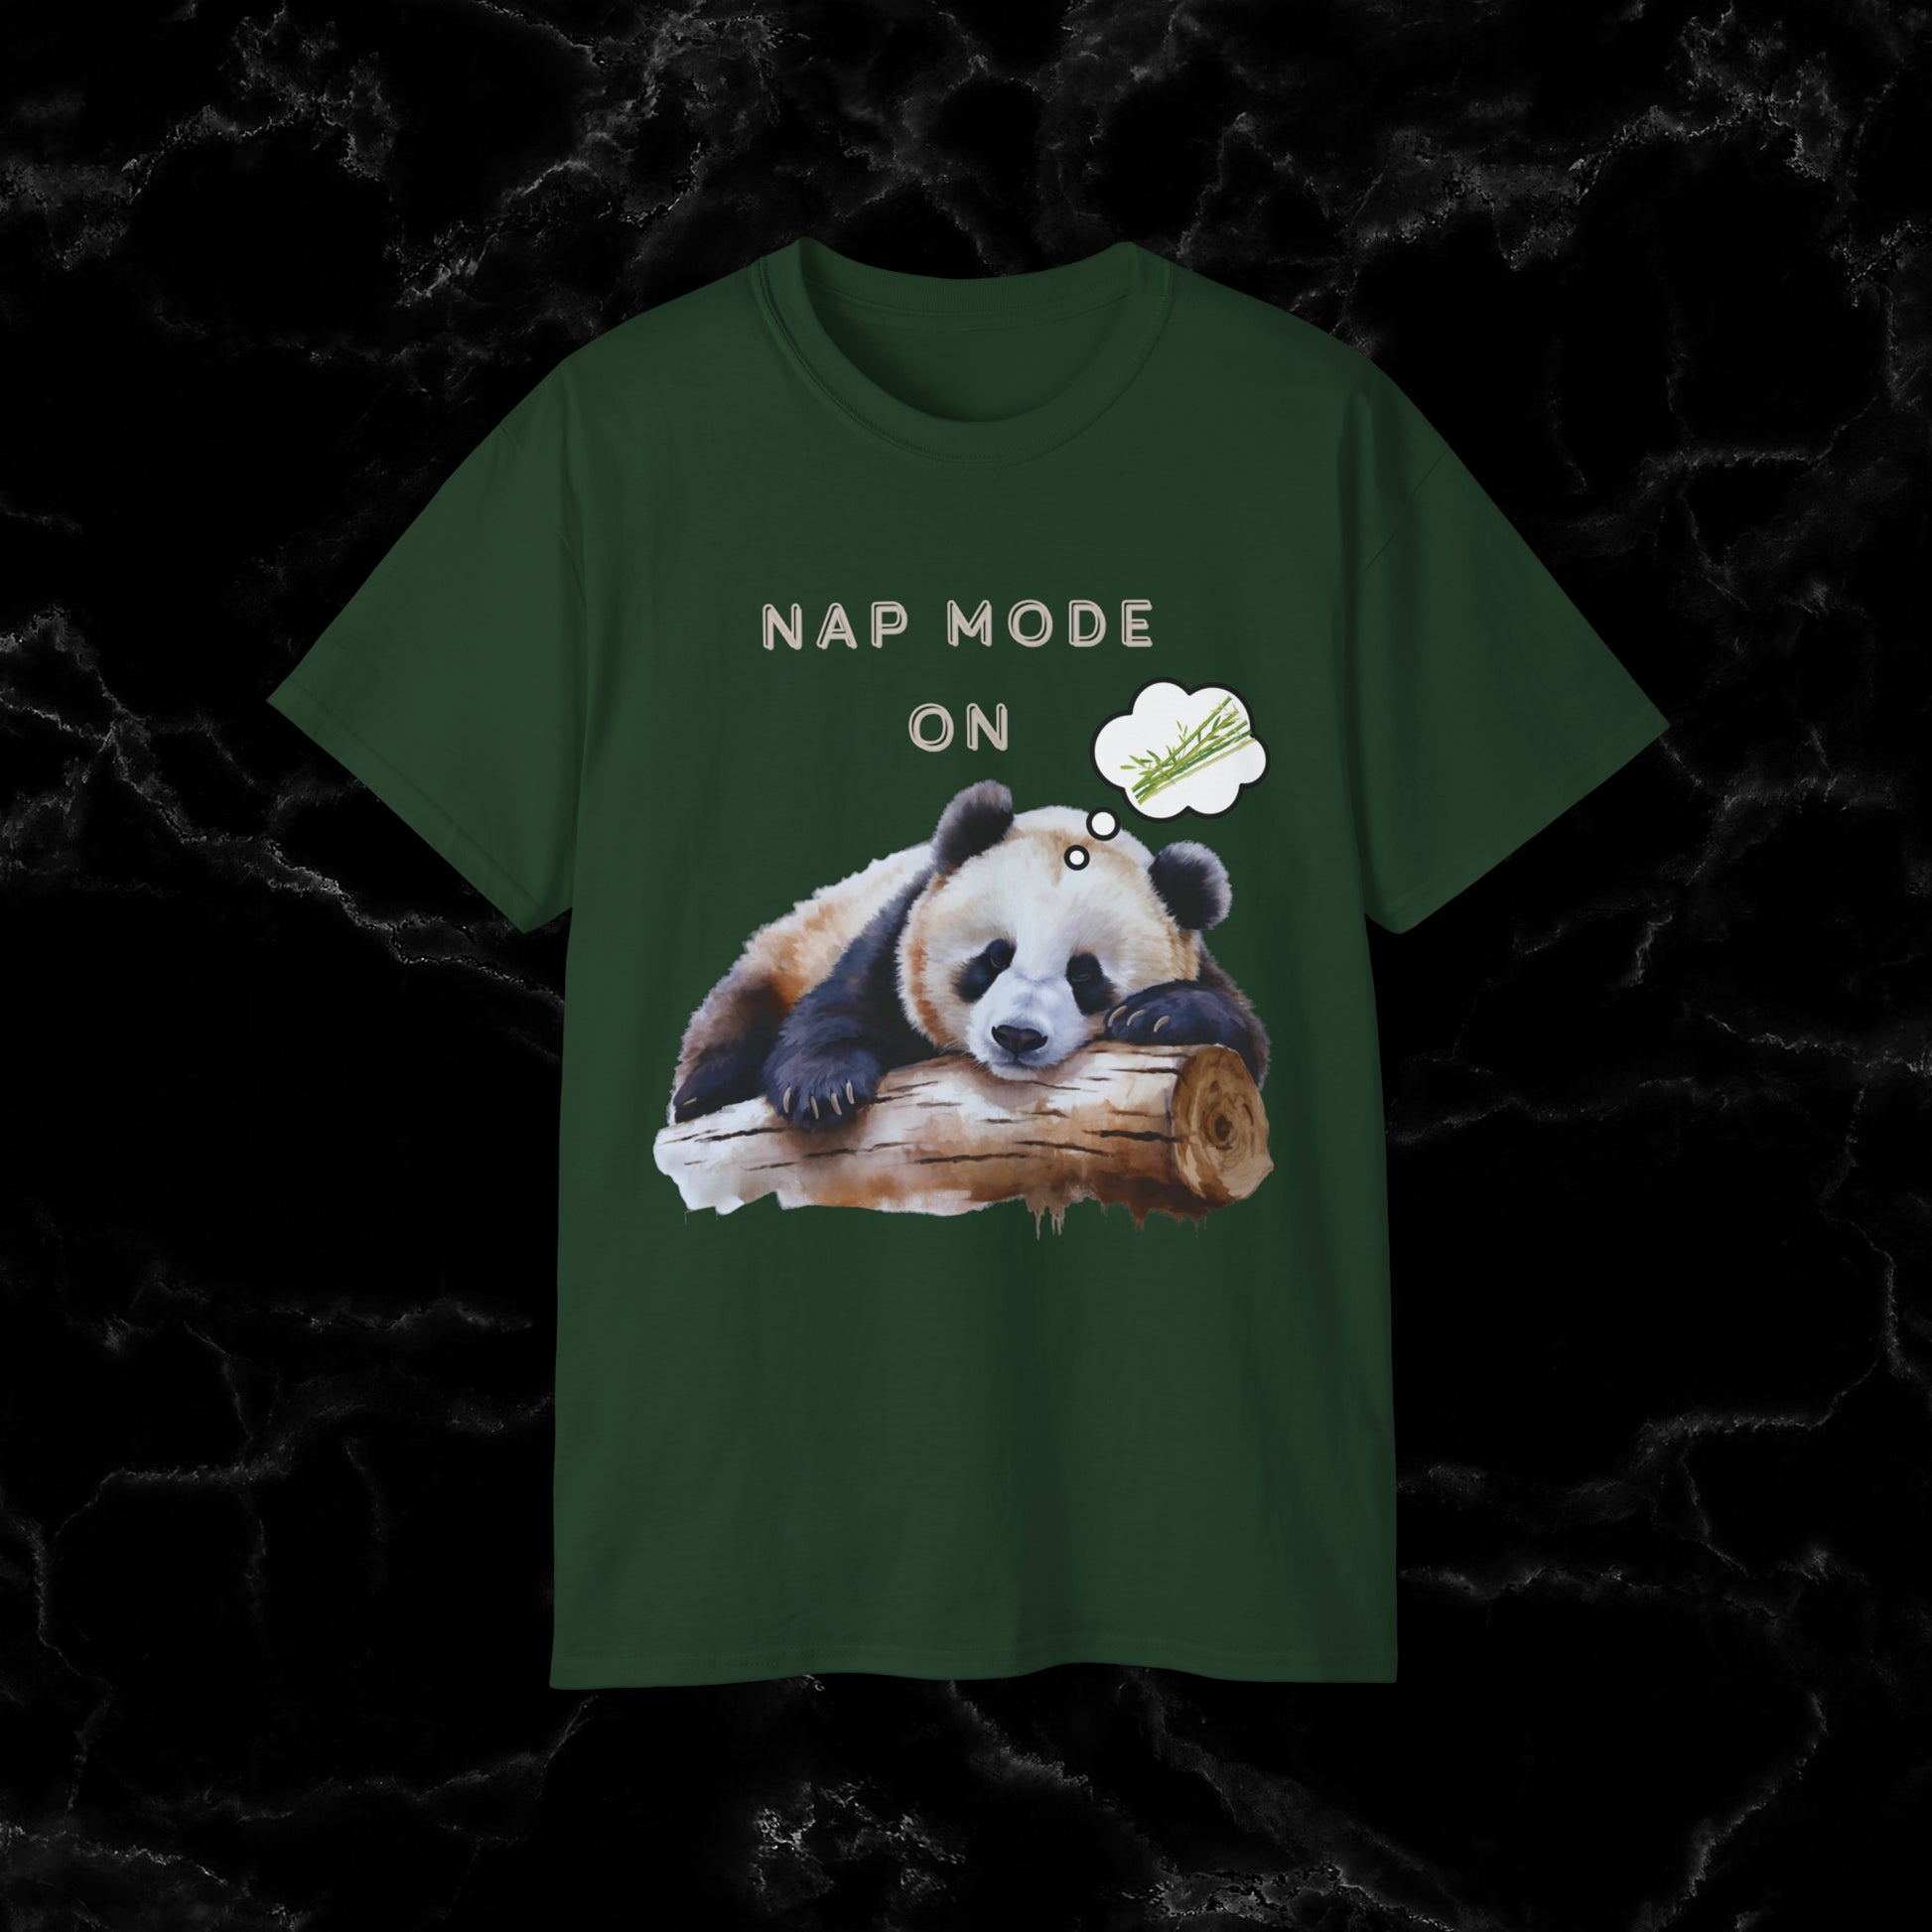 Nap Time Panda Unisex Funny Tee - Hilarious Panda Nap Mode On T-Shirt Forest Green S 